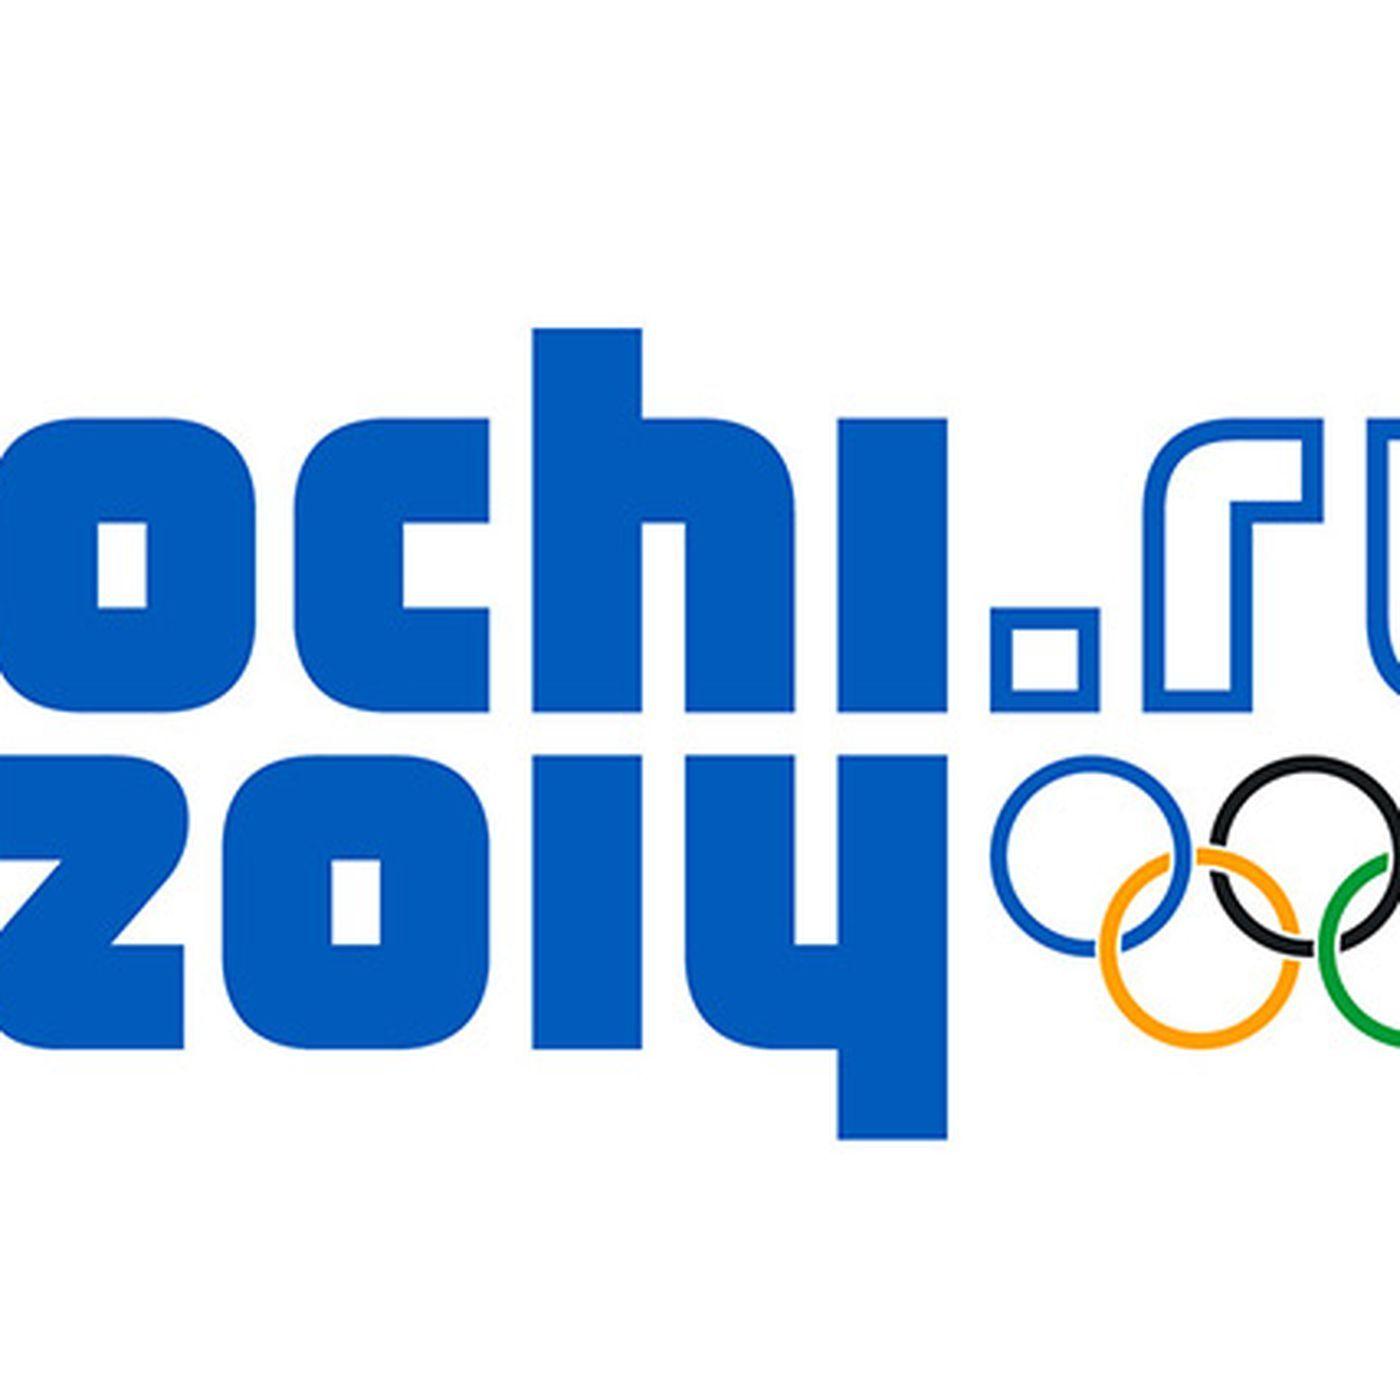 Sochi Logo - Sochi Olympics puts a humble logo on a garish games - The Verge